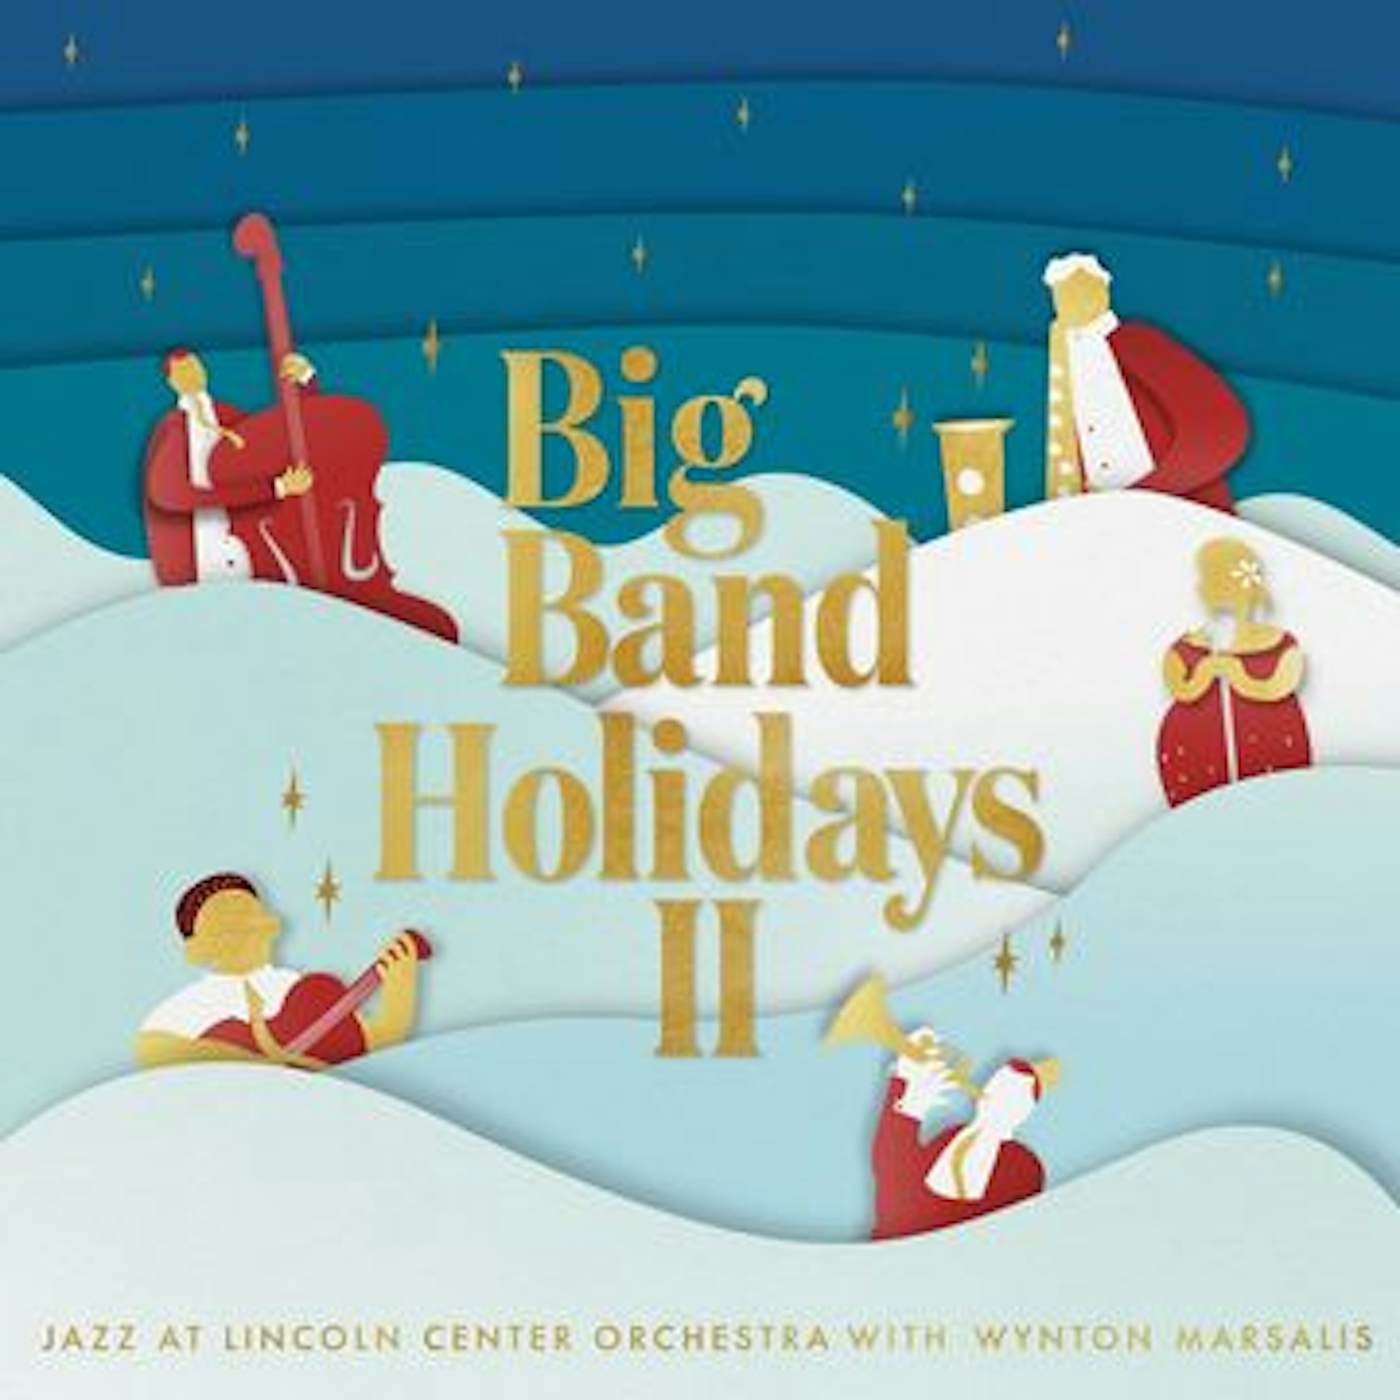 Jazz at Lincoln Center Orchestra with Wynton Marsalis BIG BAND HOLIDAYS II CD